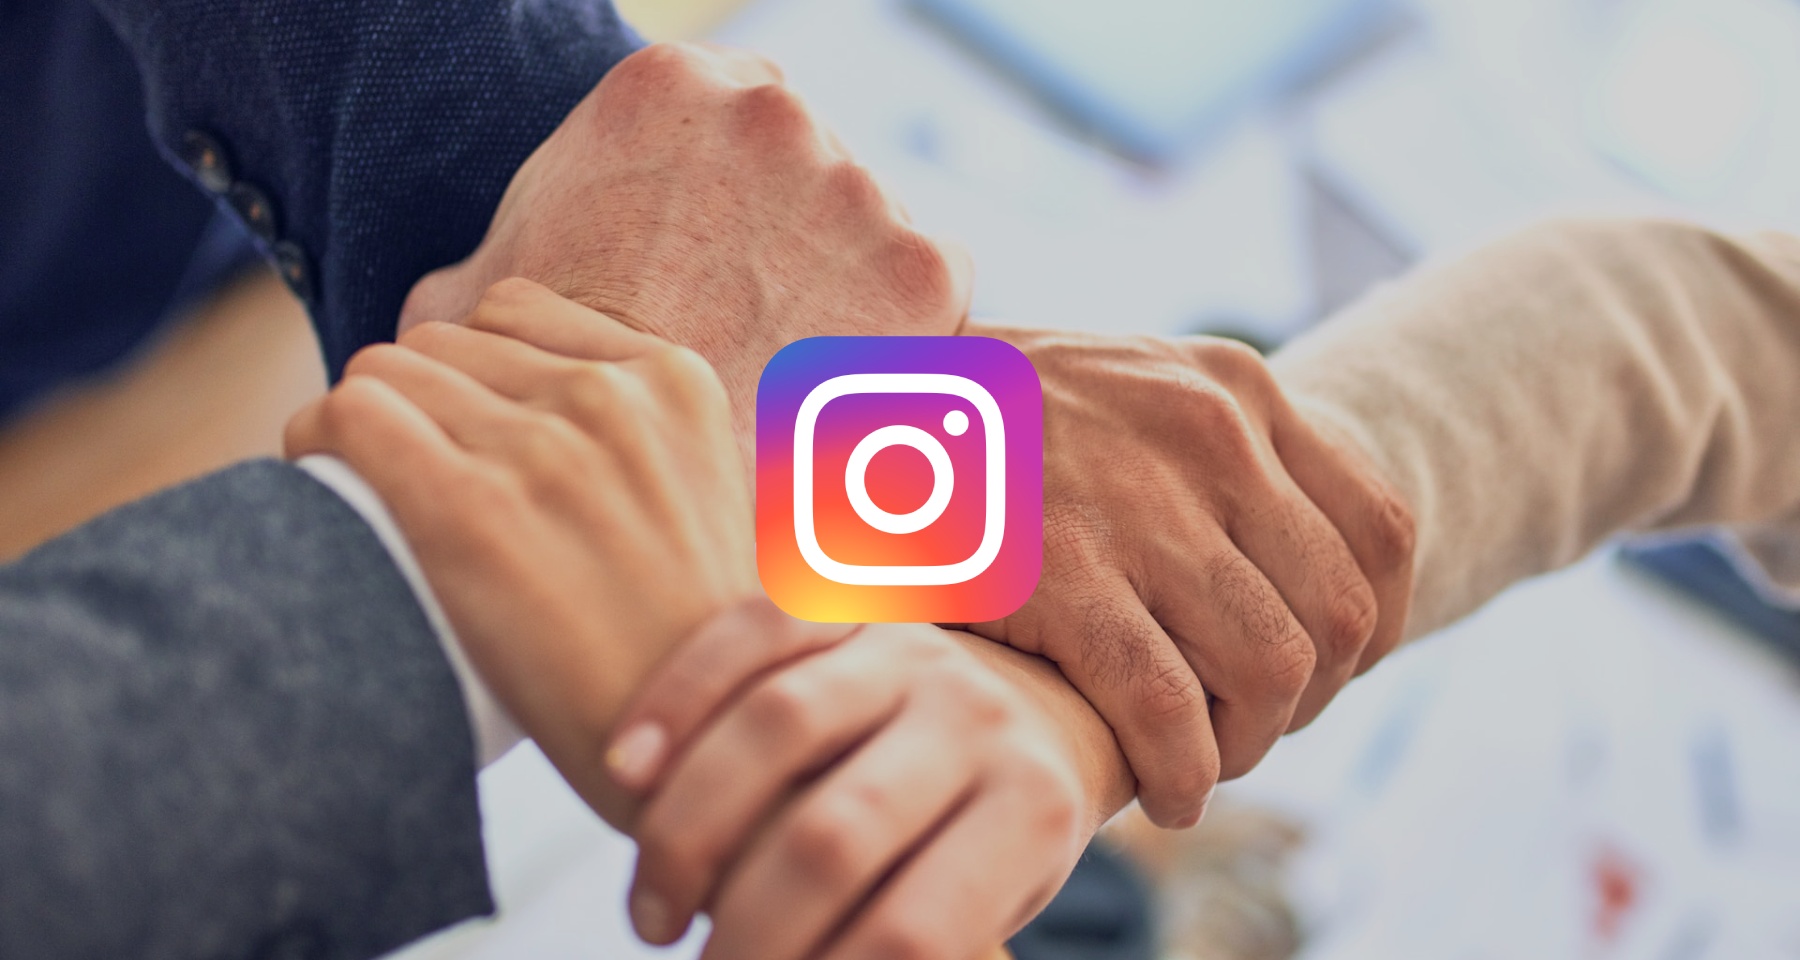 friends shaking hands with Instagram logo